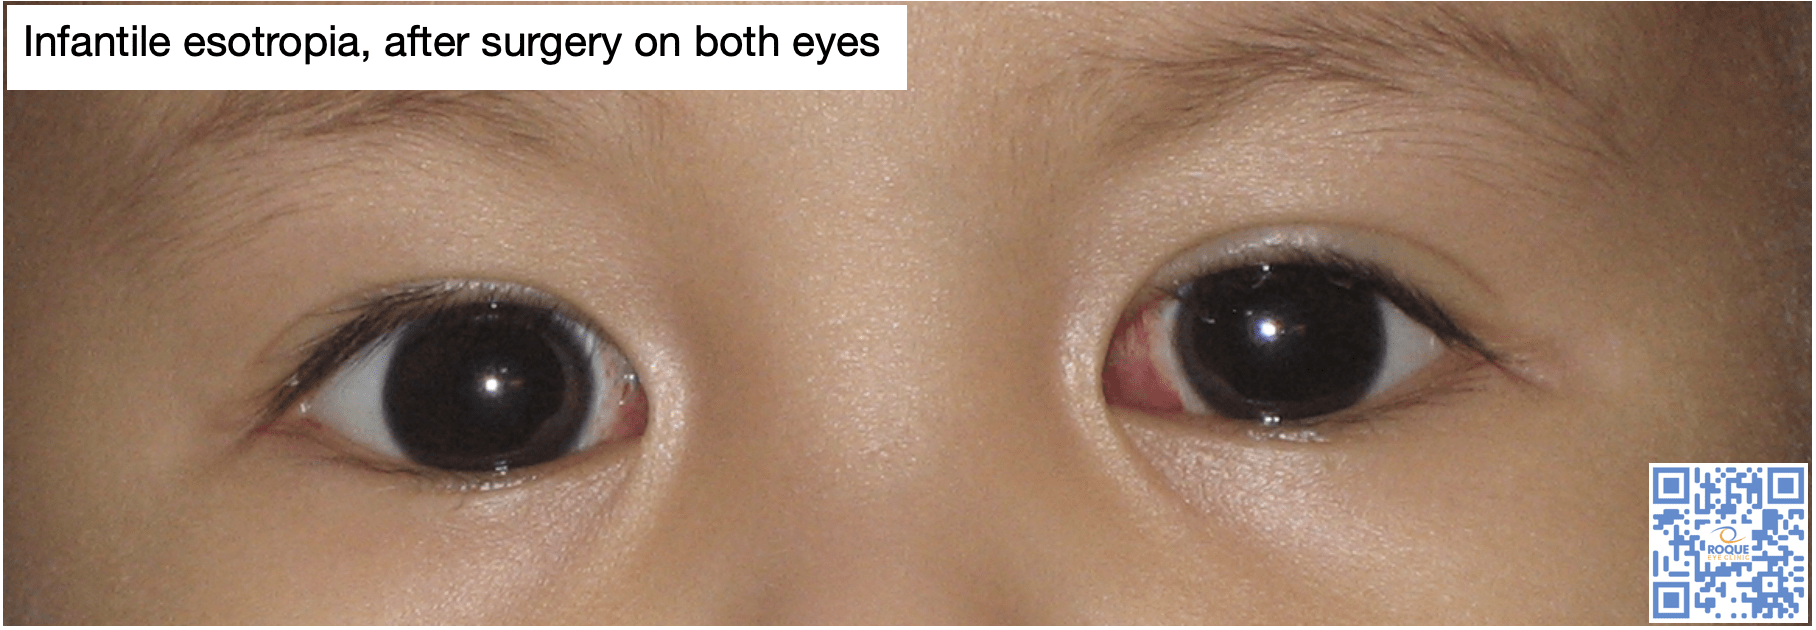 Infantile esotropia, after surgery on both eyes